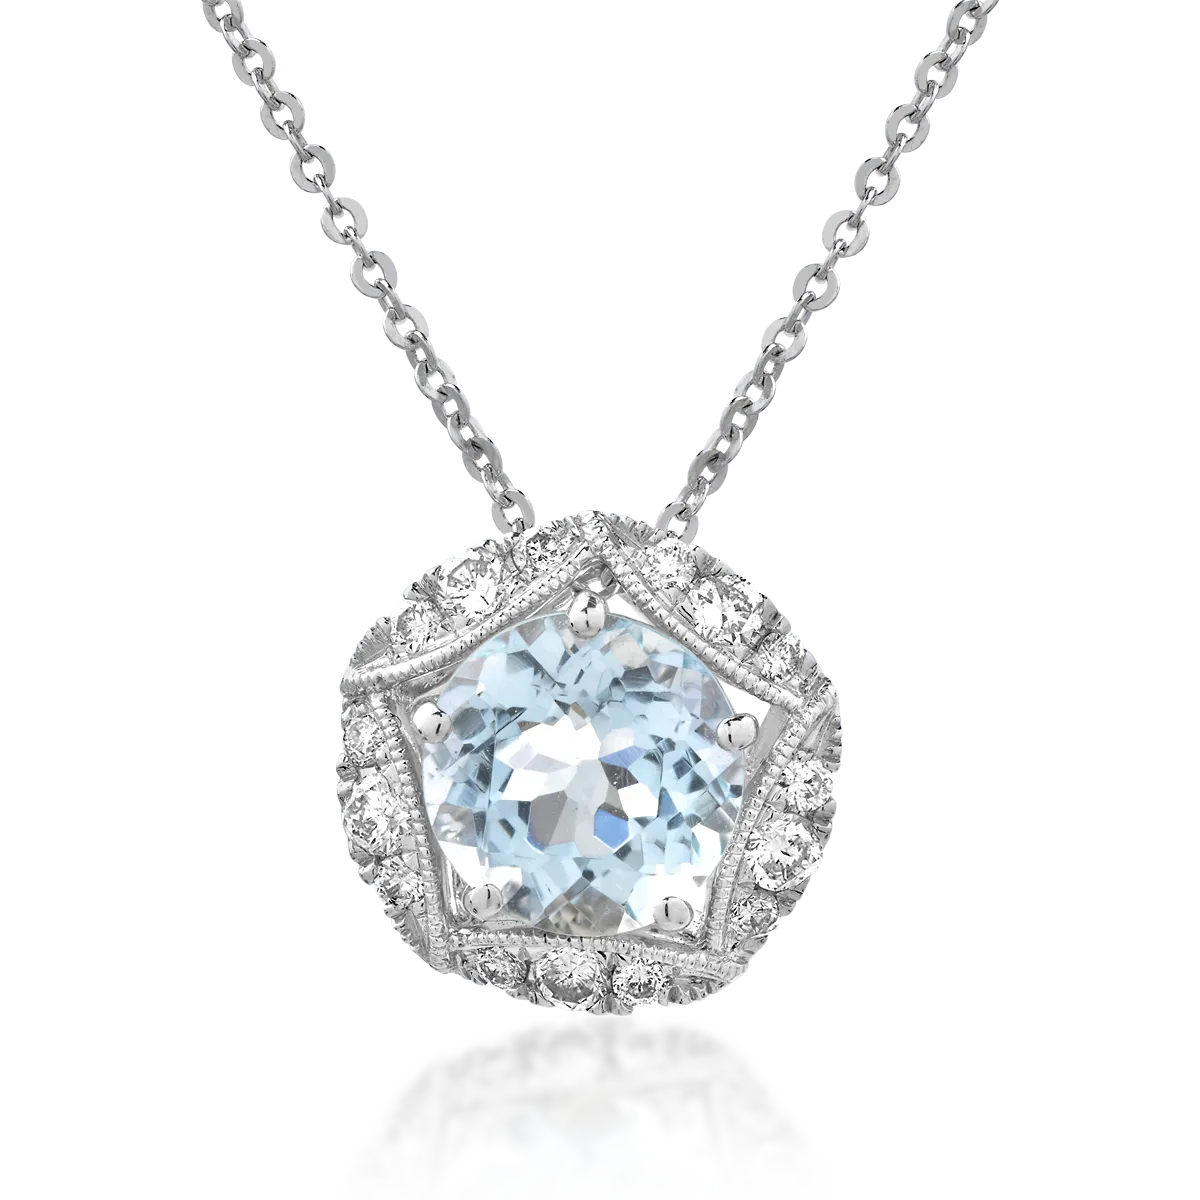 18K white gold pendant necklace with 2.1ct aquamarine and 0.31ct diamonds